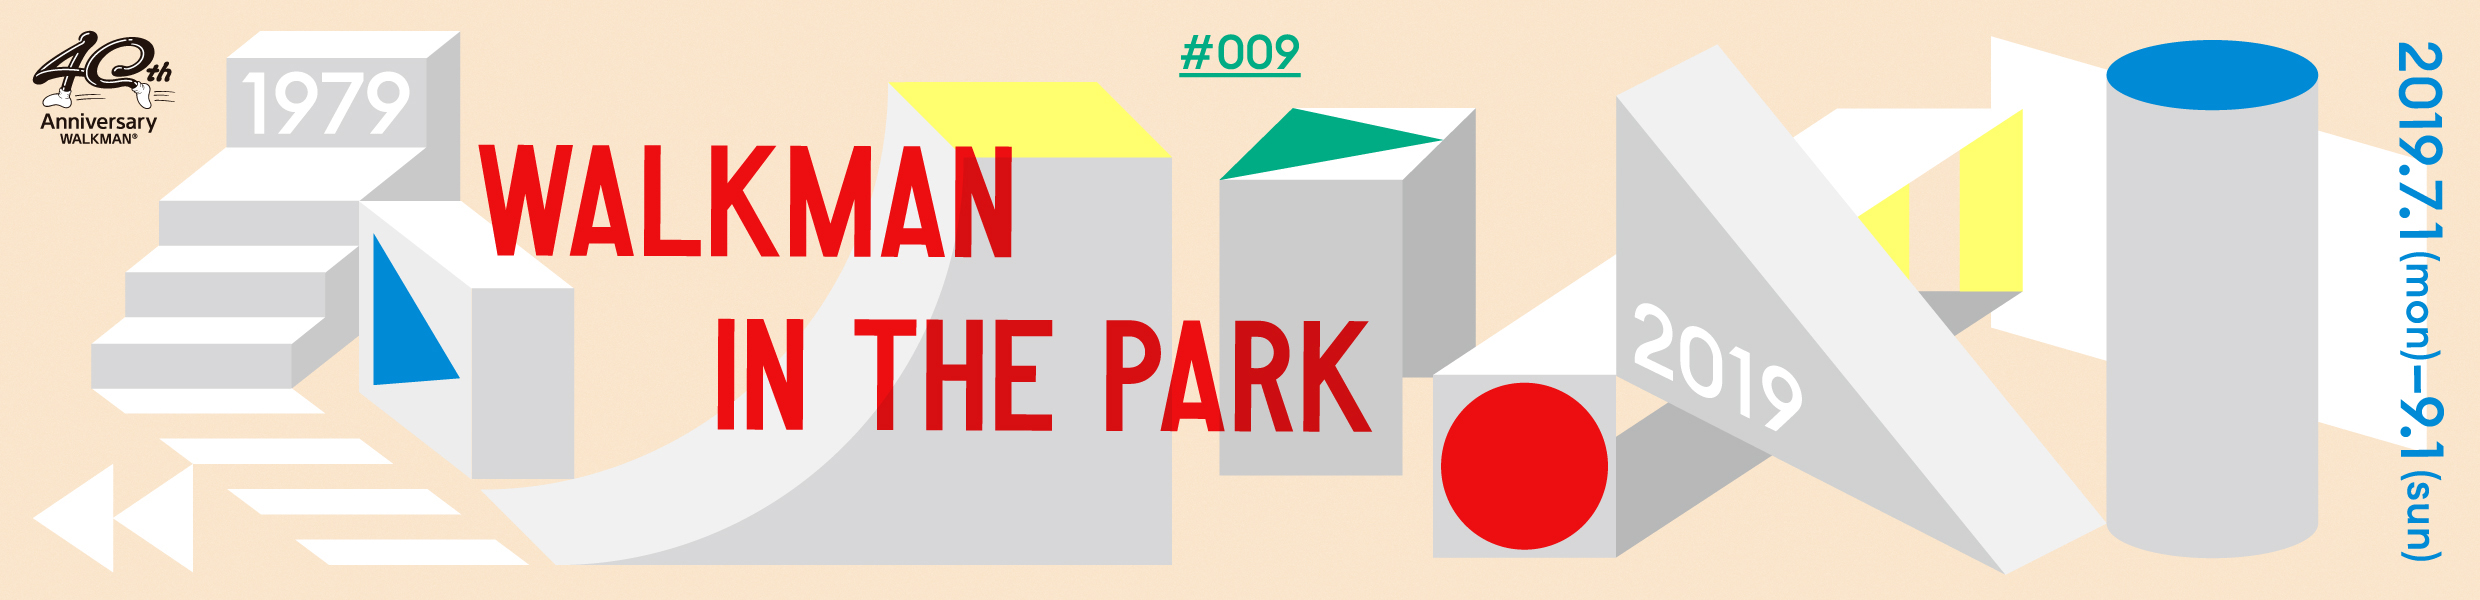 #009 WALKMAN IN THE PARK 2019.7.1(mon) - 9.1(sun)